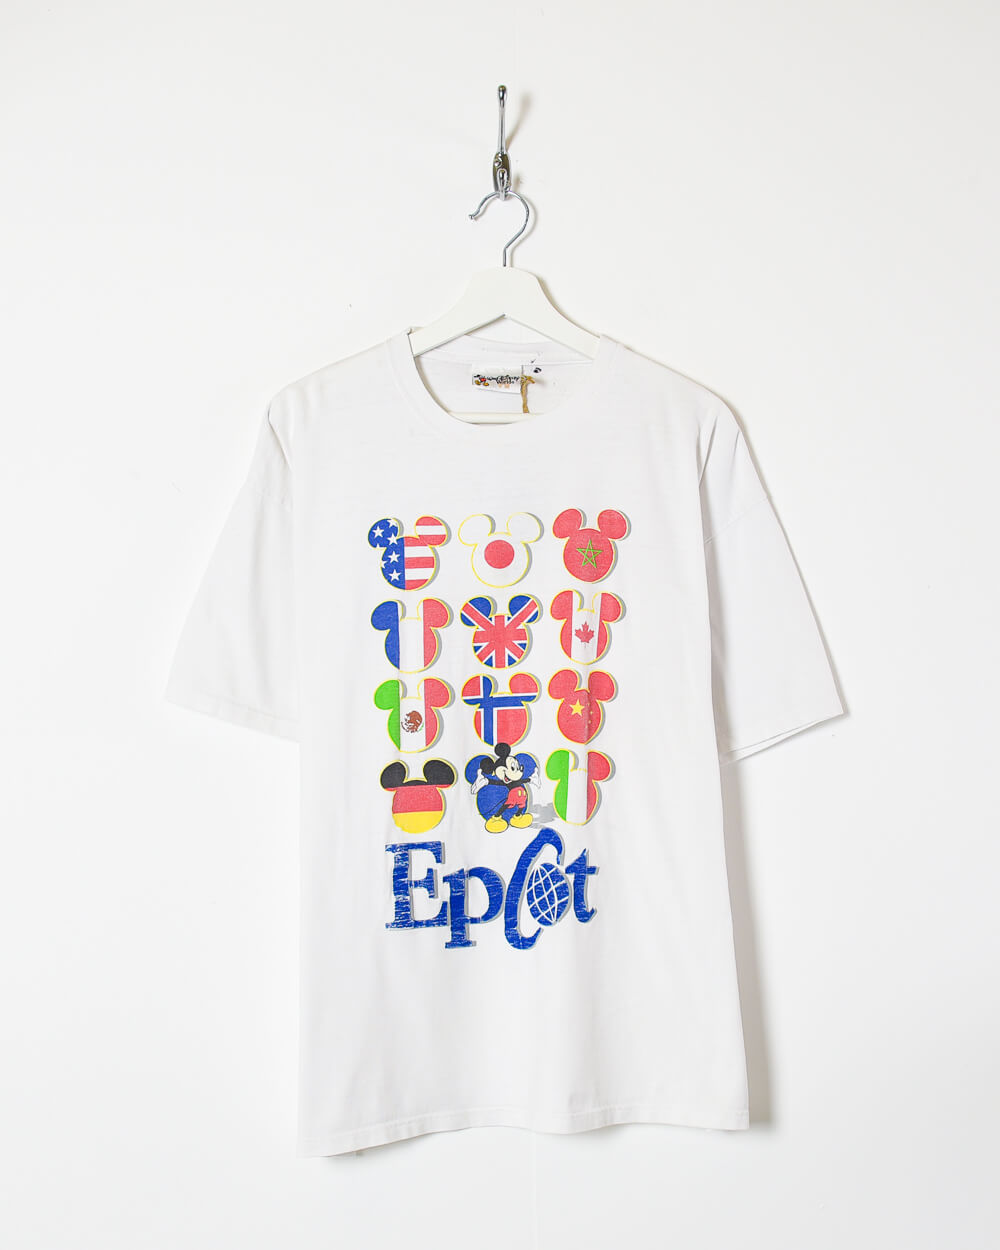 Stone Walt Disney World Epcot T-Shirt - Large